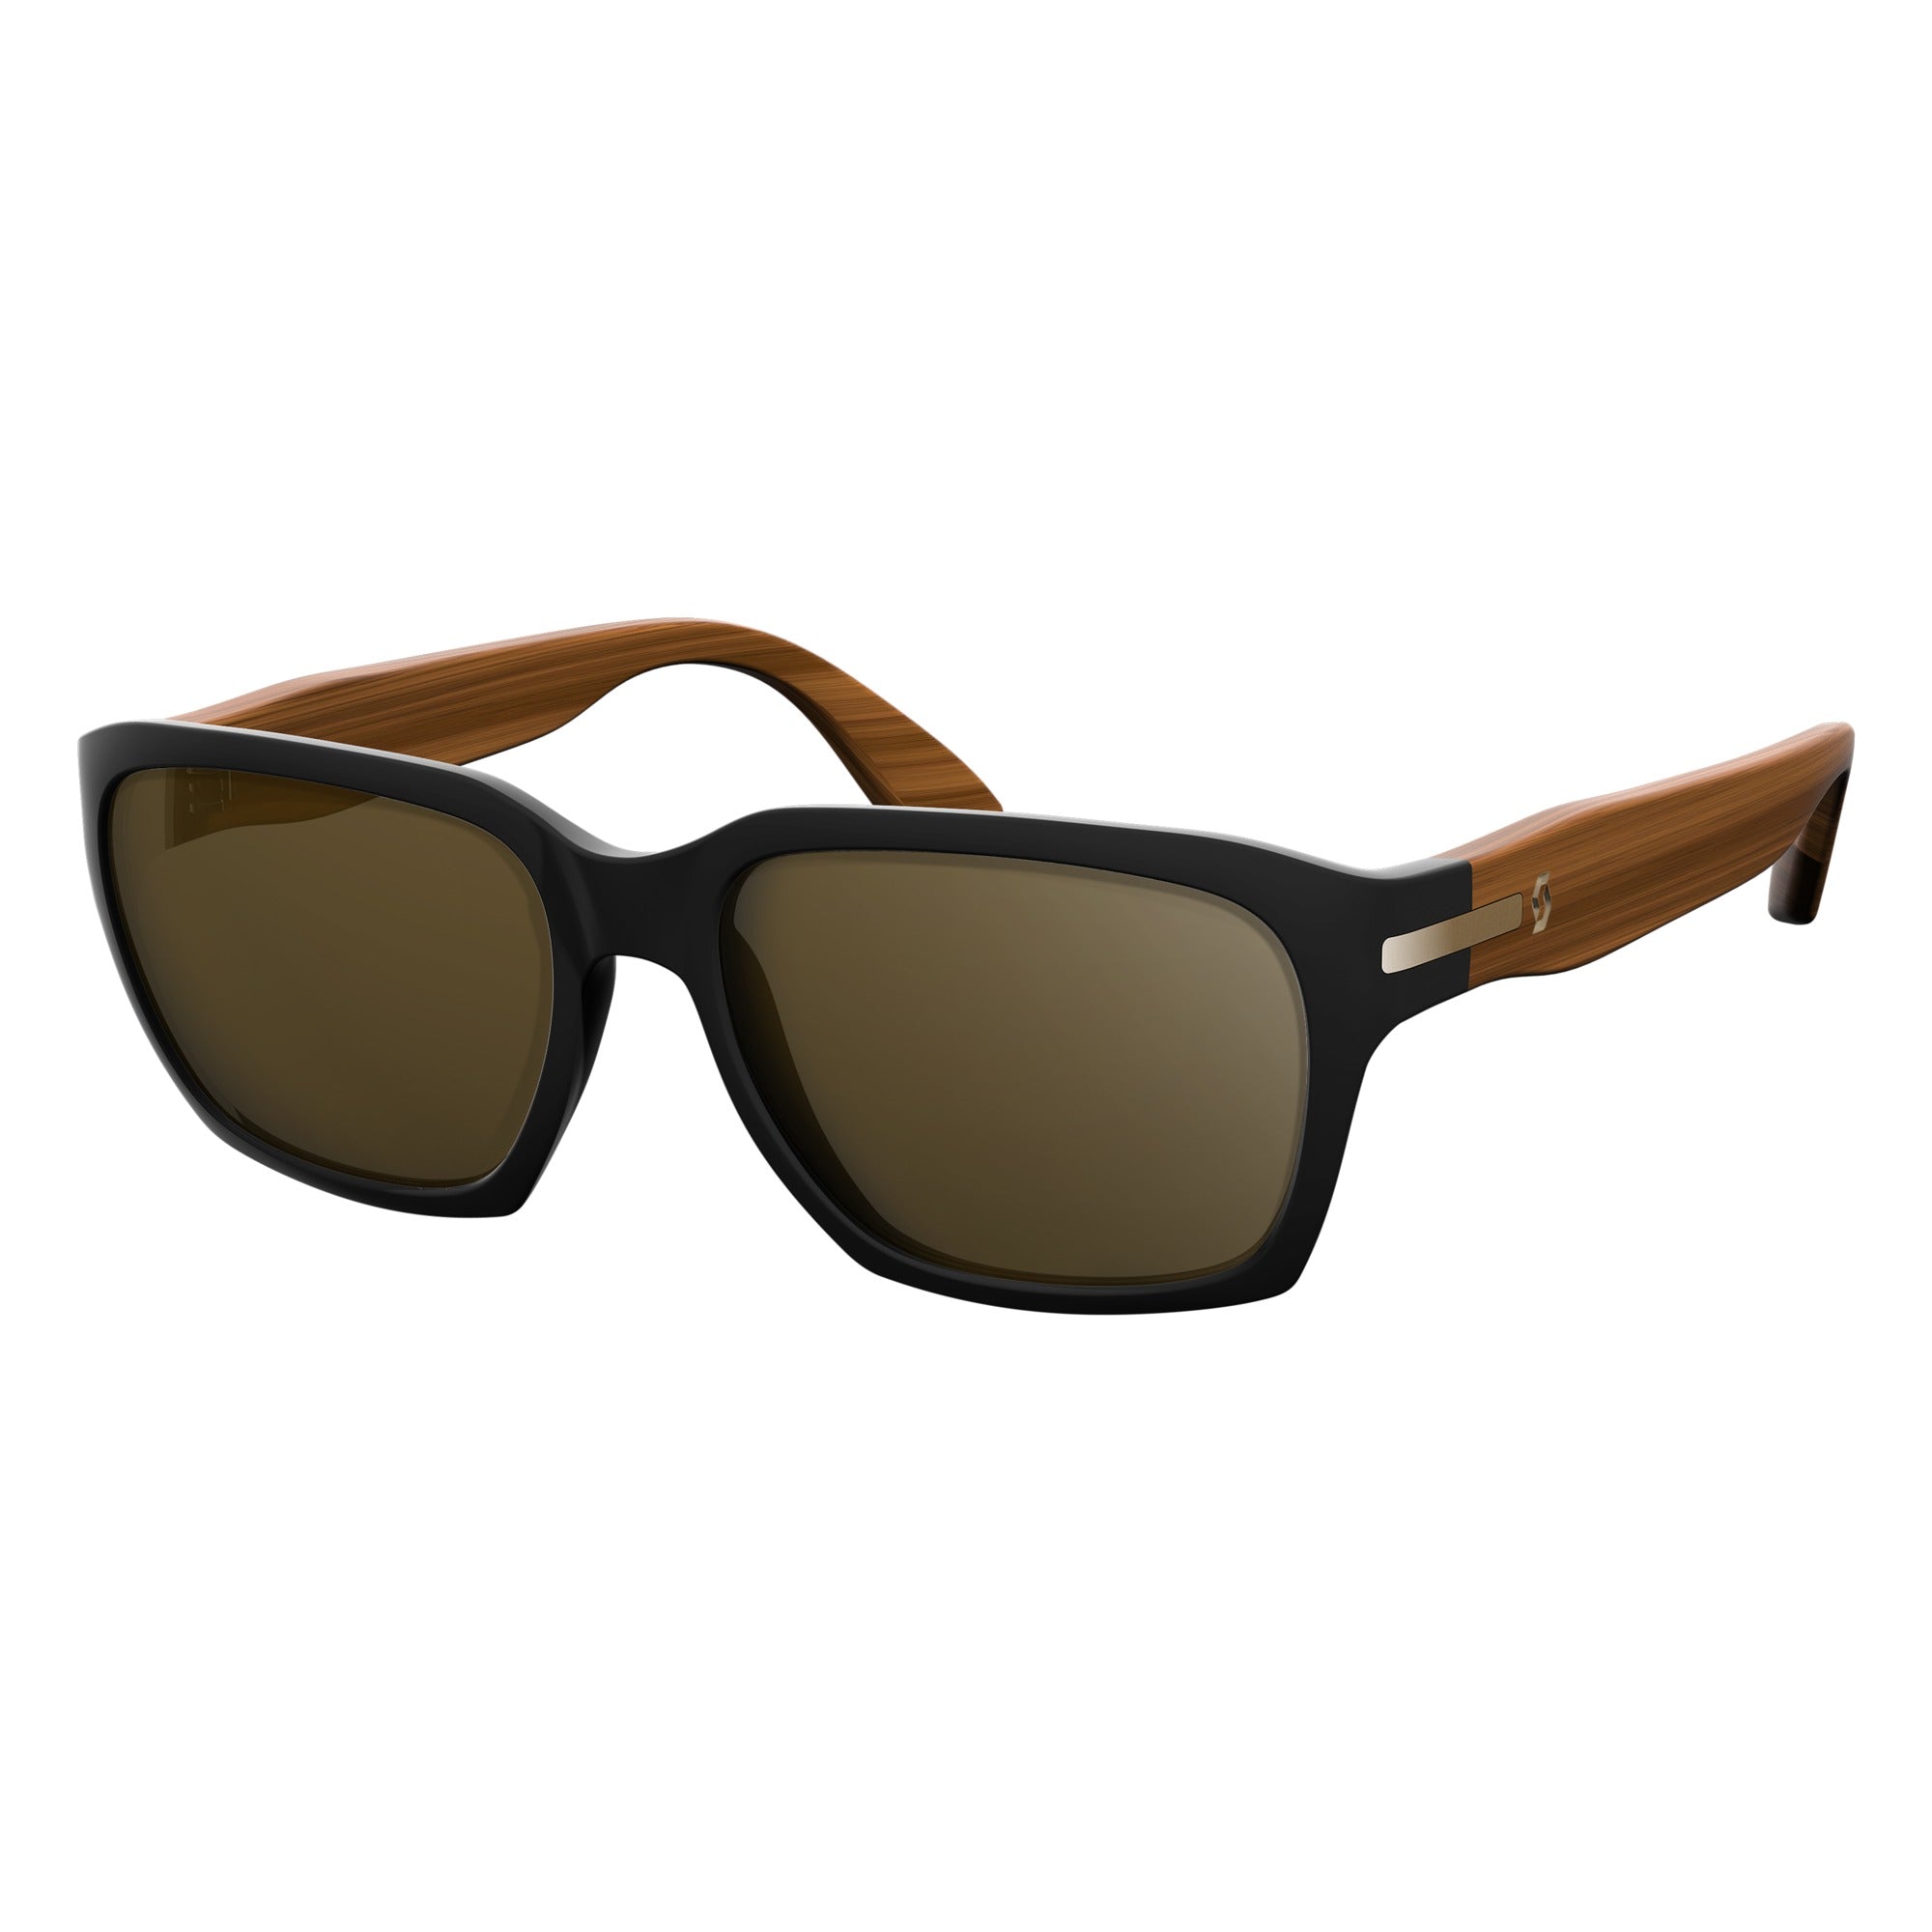 Scott Vector Sunglasses : Amazon.de: Everything Else